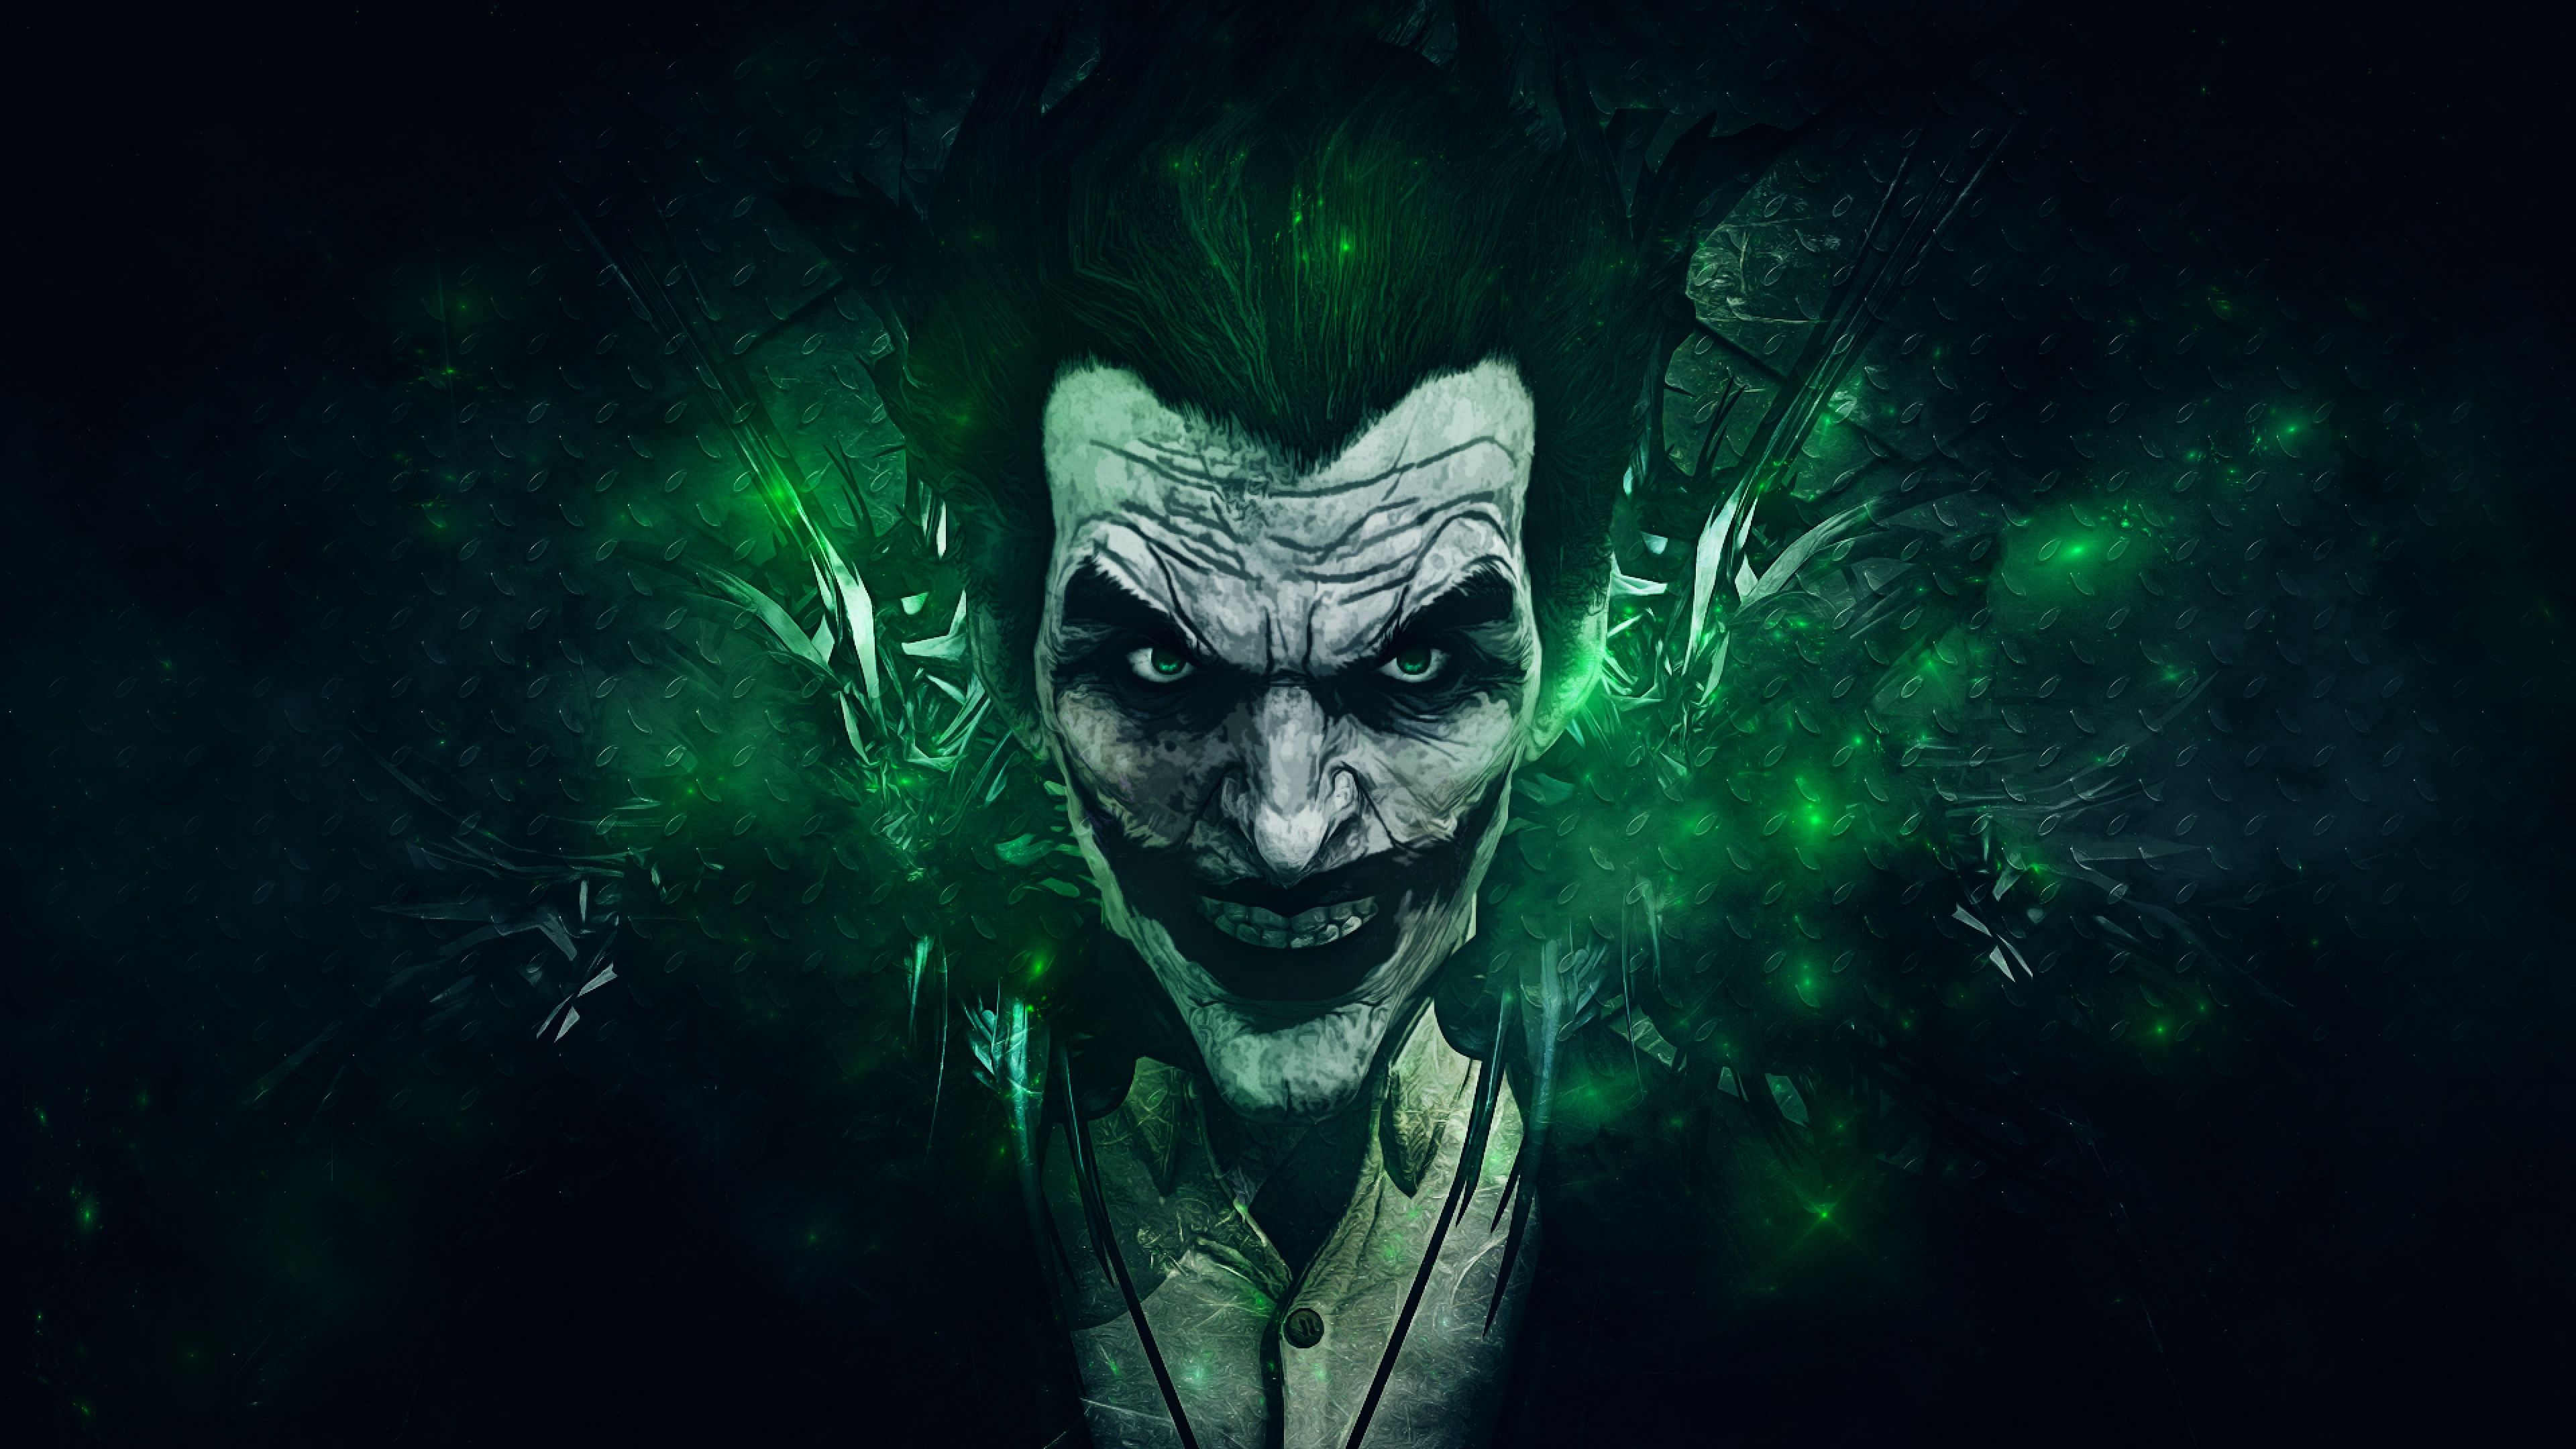 Hình nền Joker anime đẹp